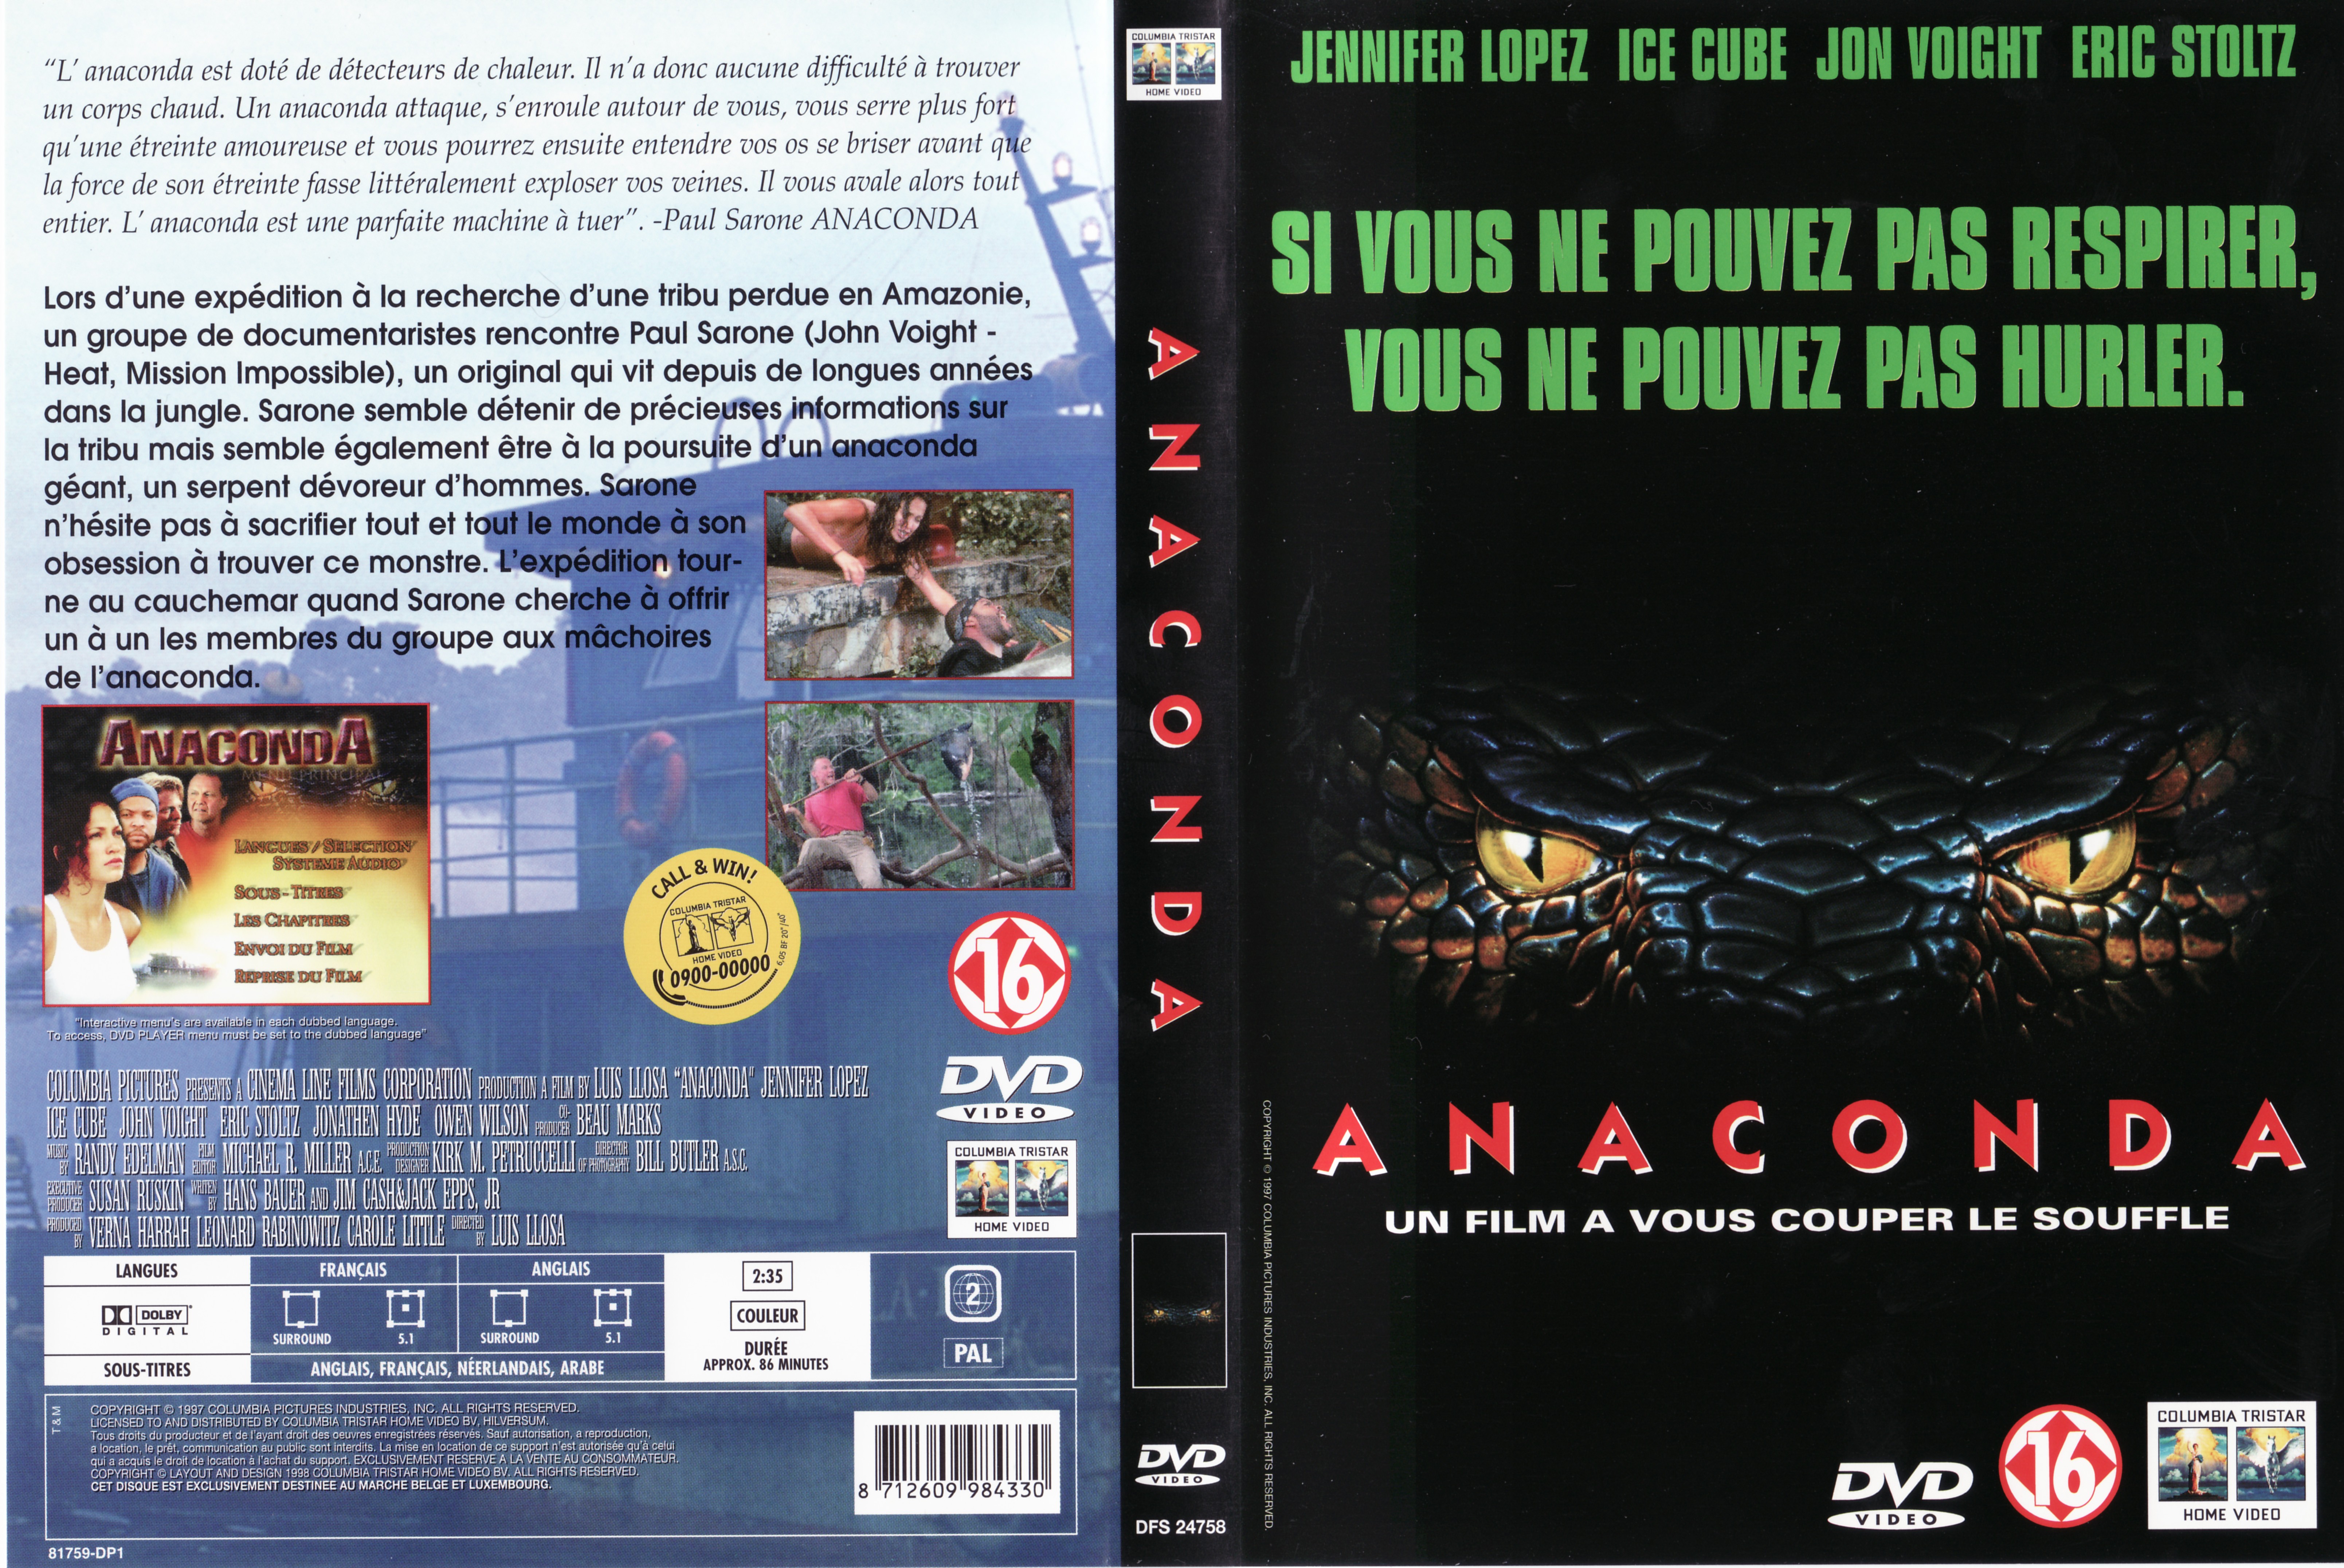 Jaquette DVD Anaconda v2